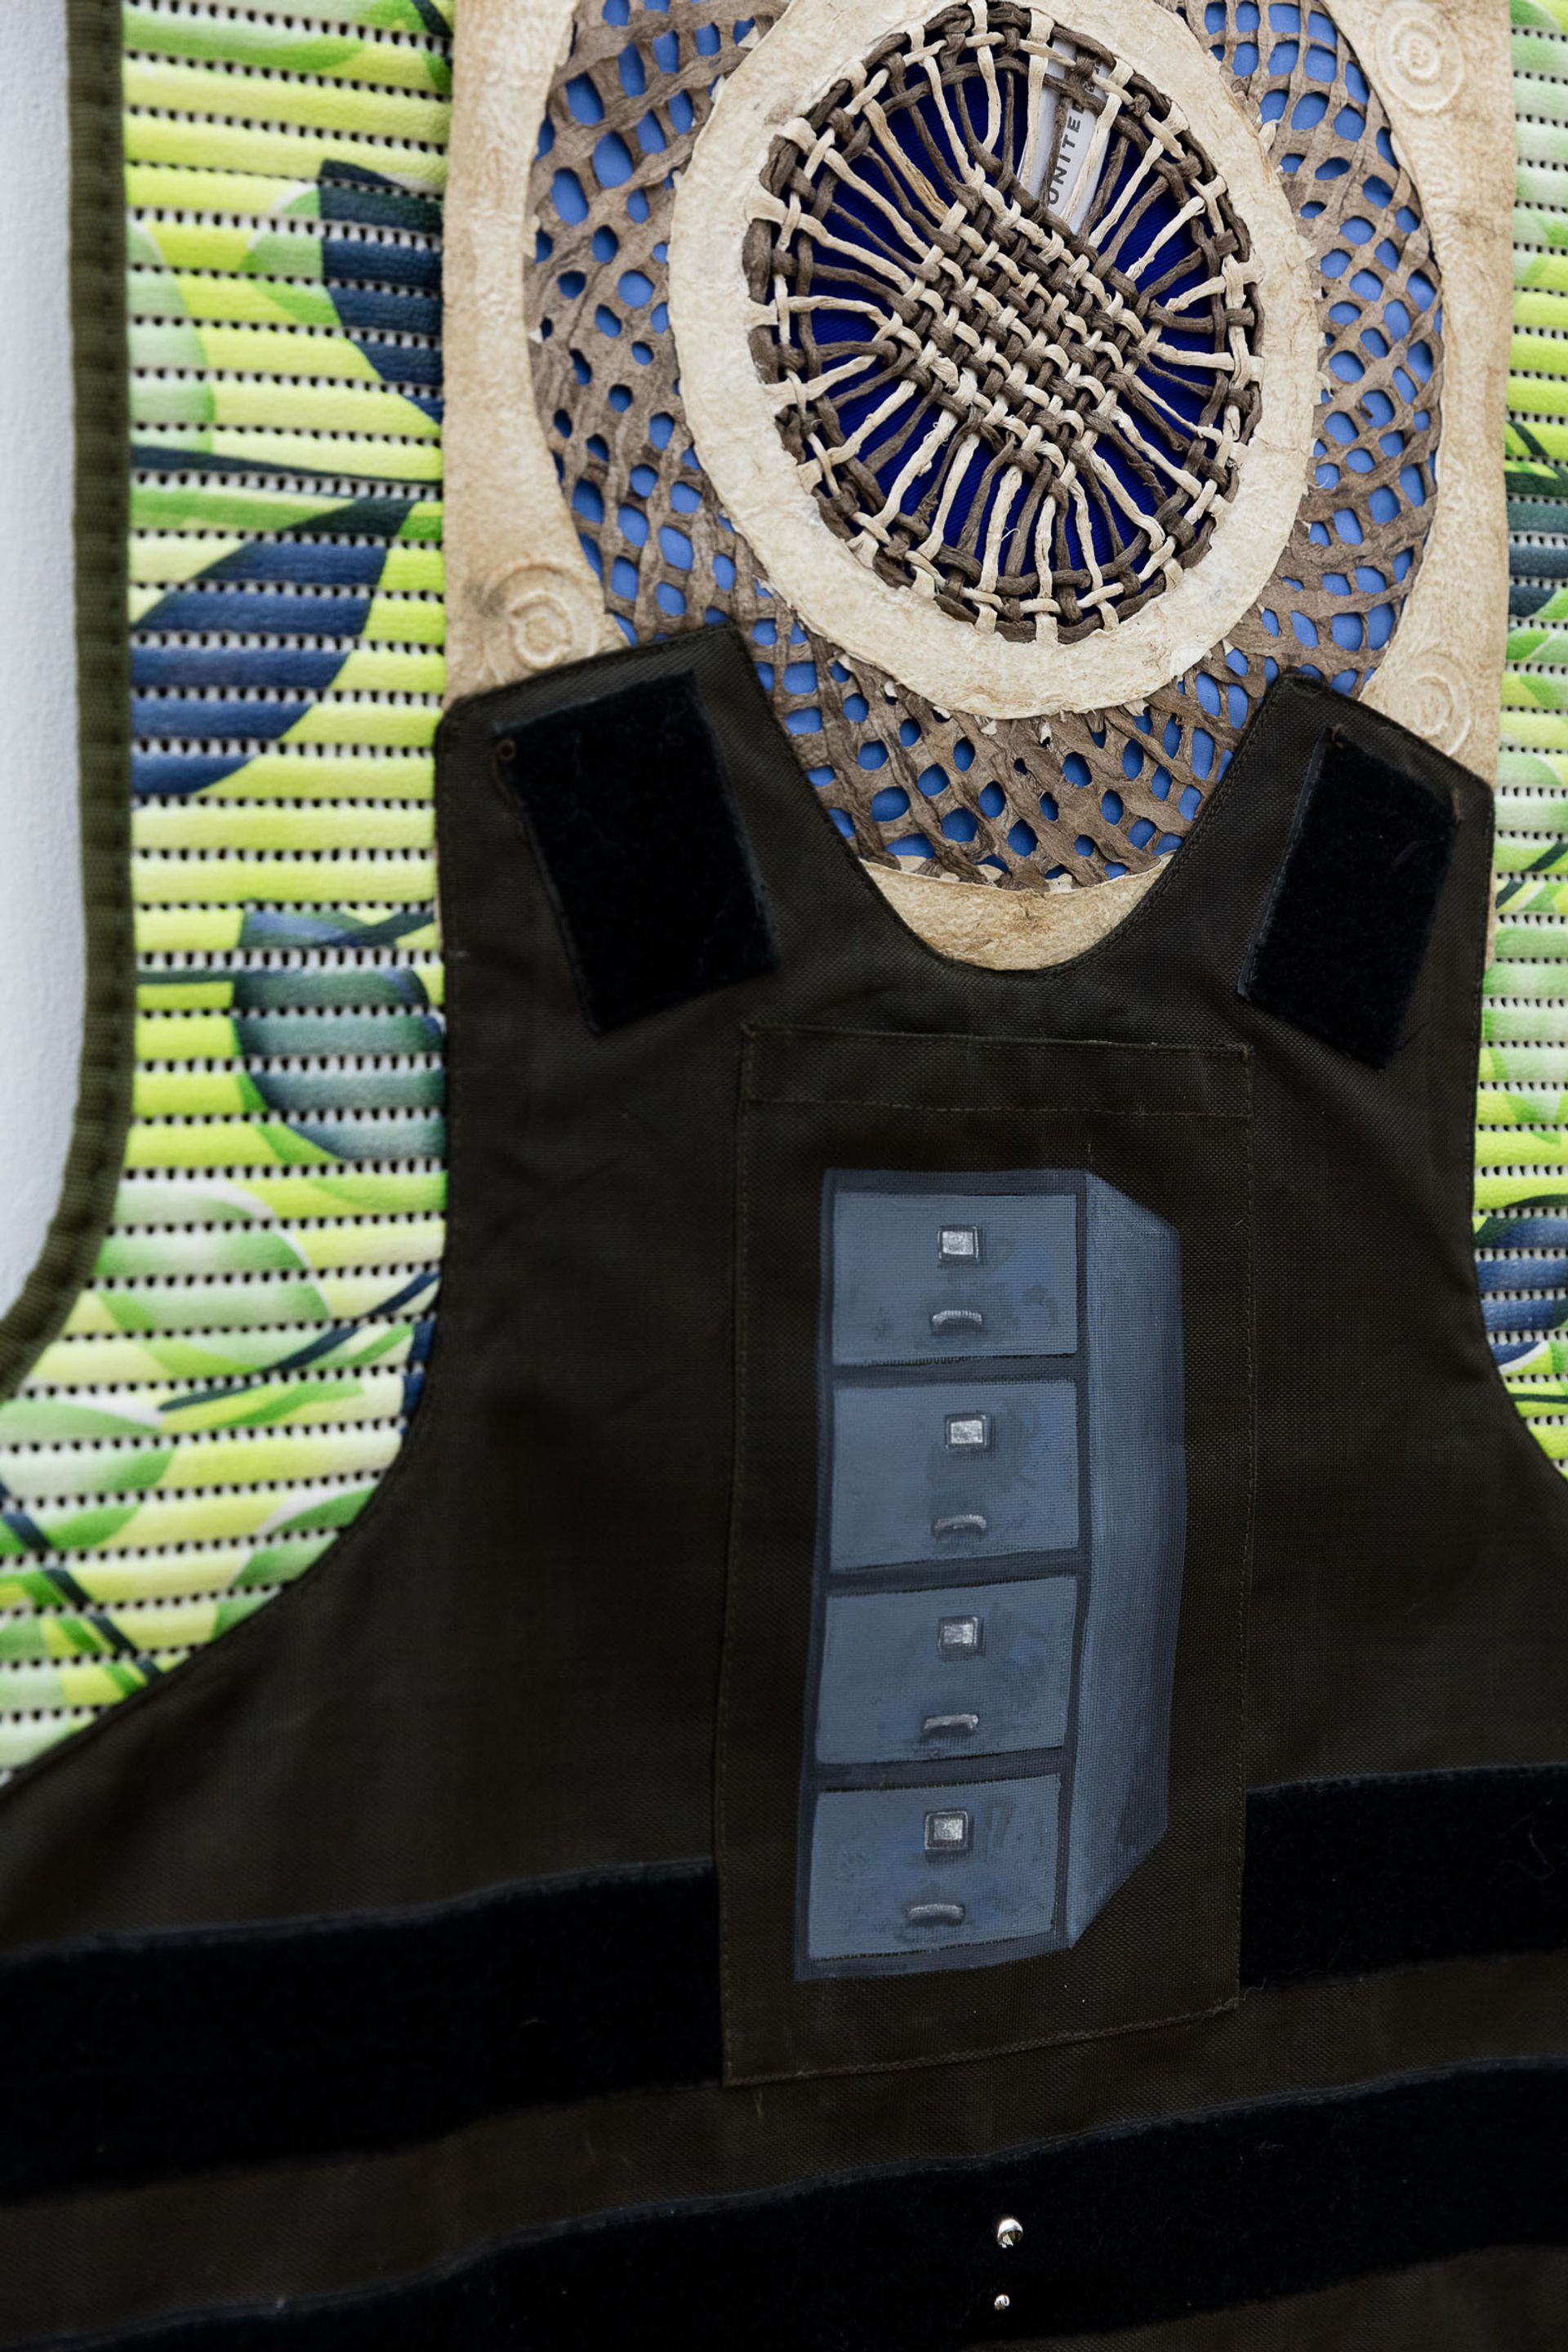 Ana Navas, United (Detail), 2018, mat, plaster, fabric, paper, metal, bulletproof vest, piercing, 193 × 65 cm, photo: Sebastian Kissel